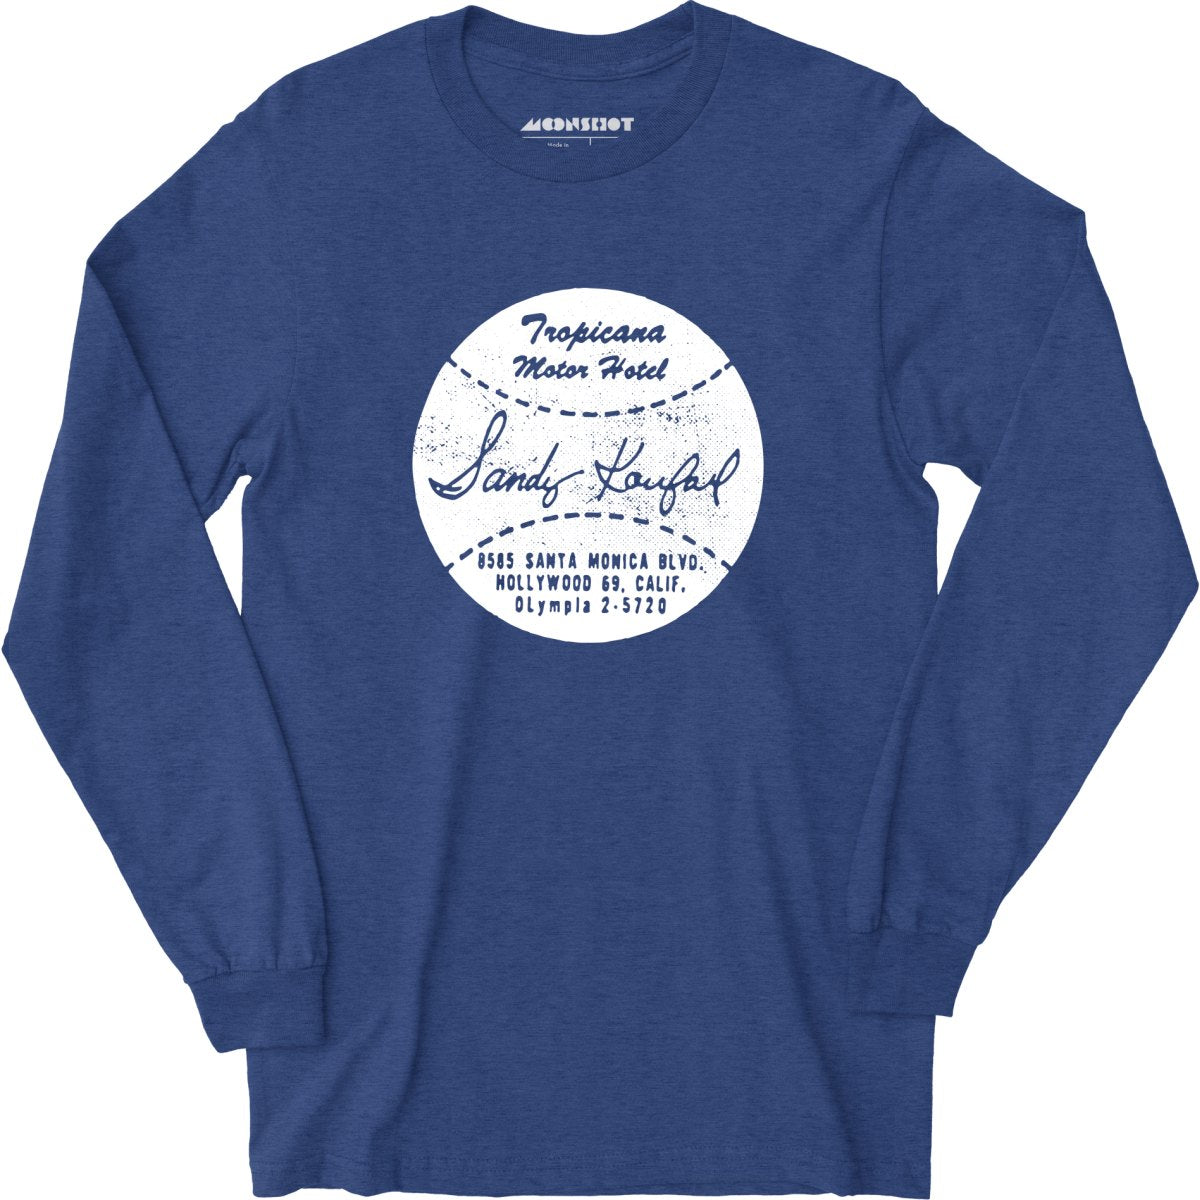 Sandy Koufax - Tee Shirt Signed